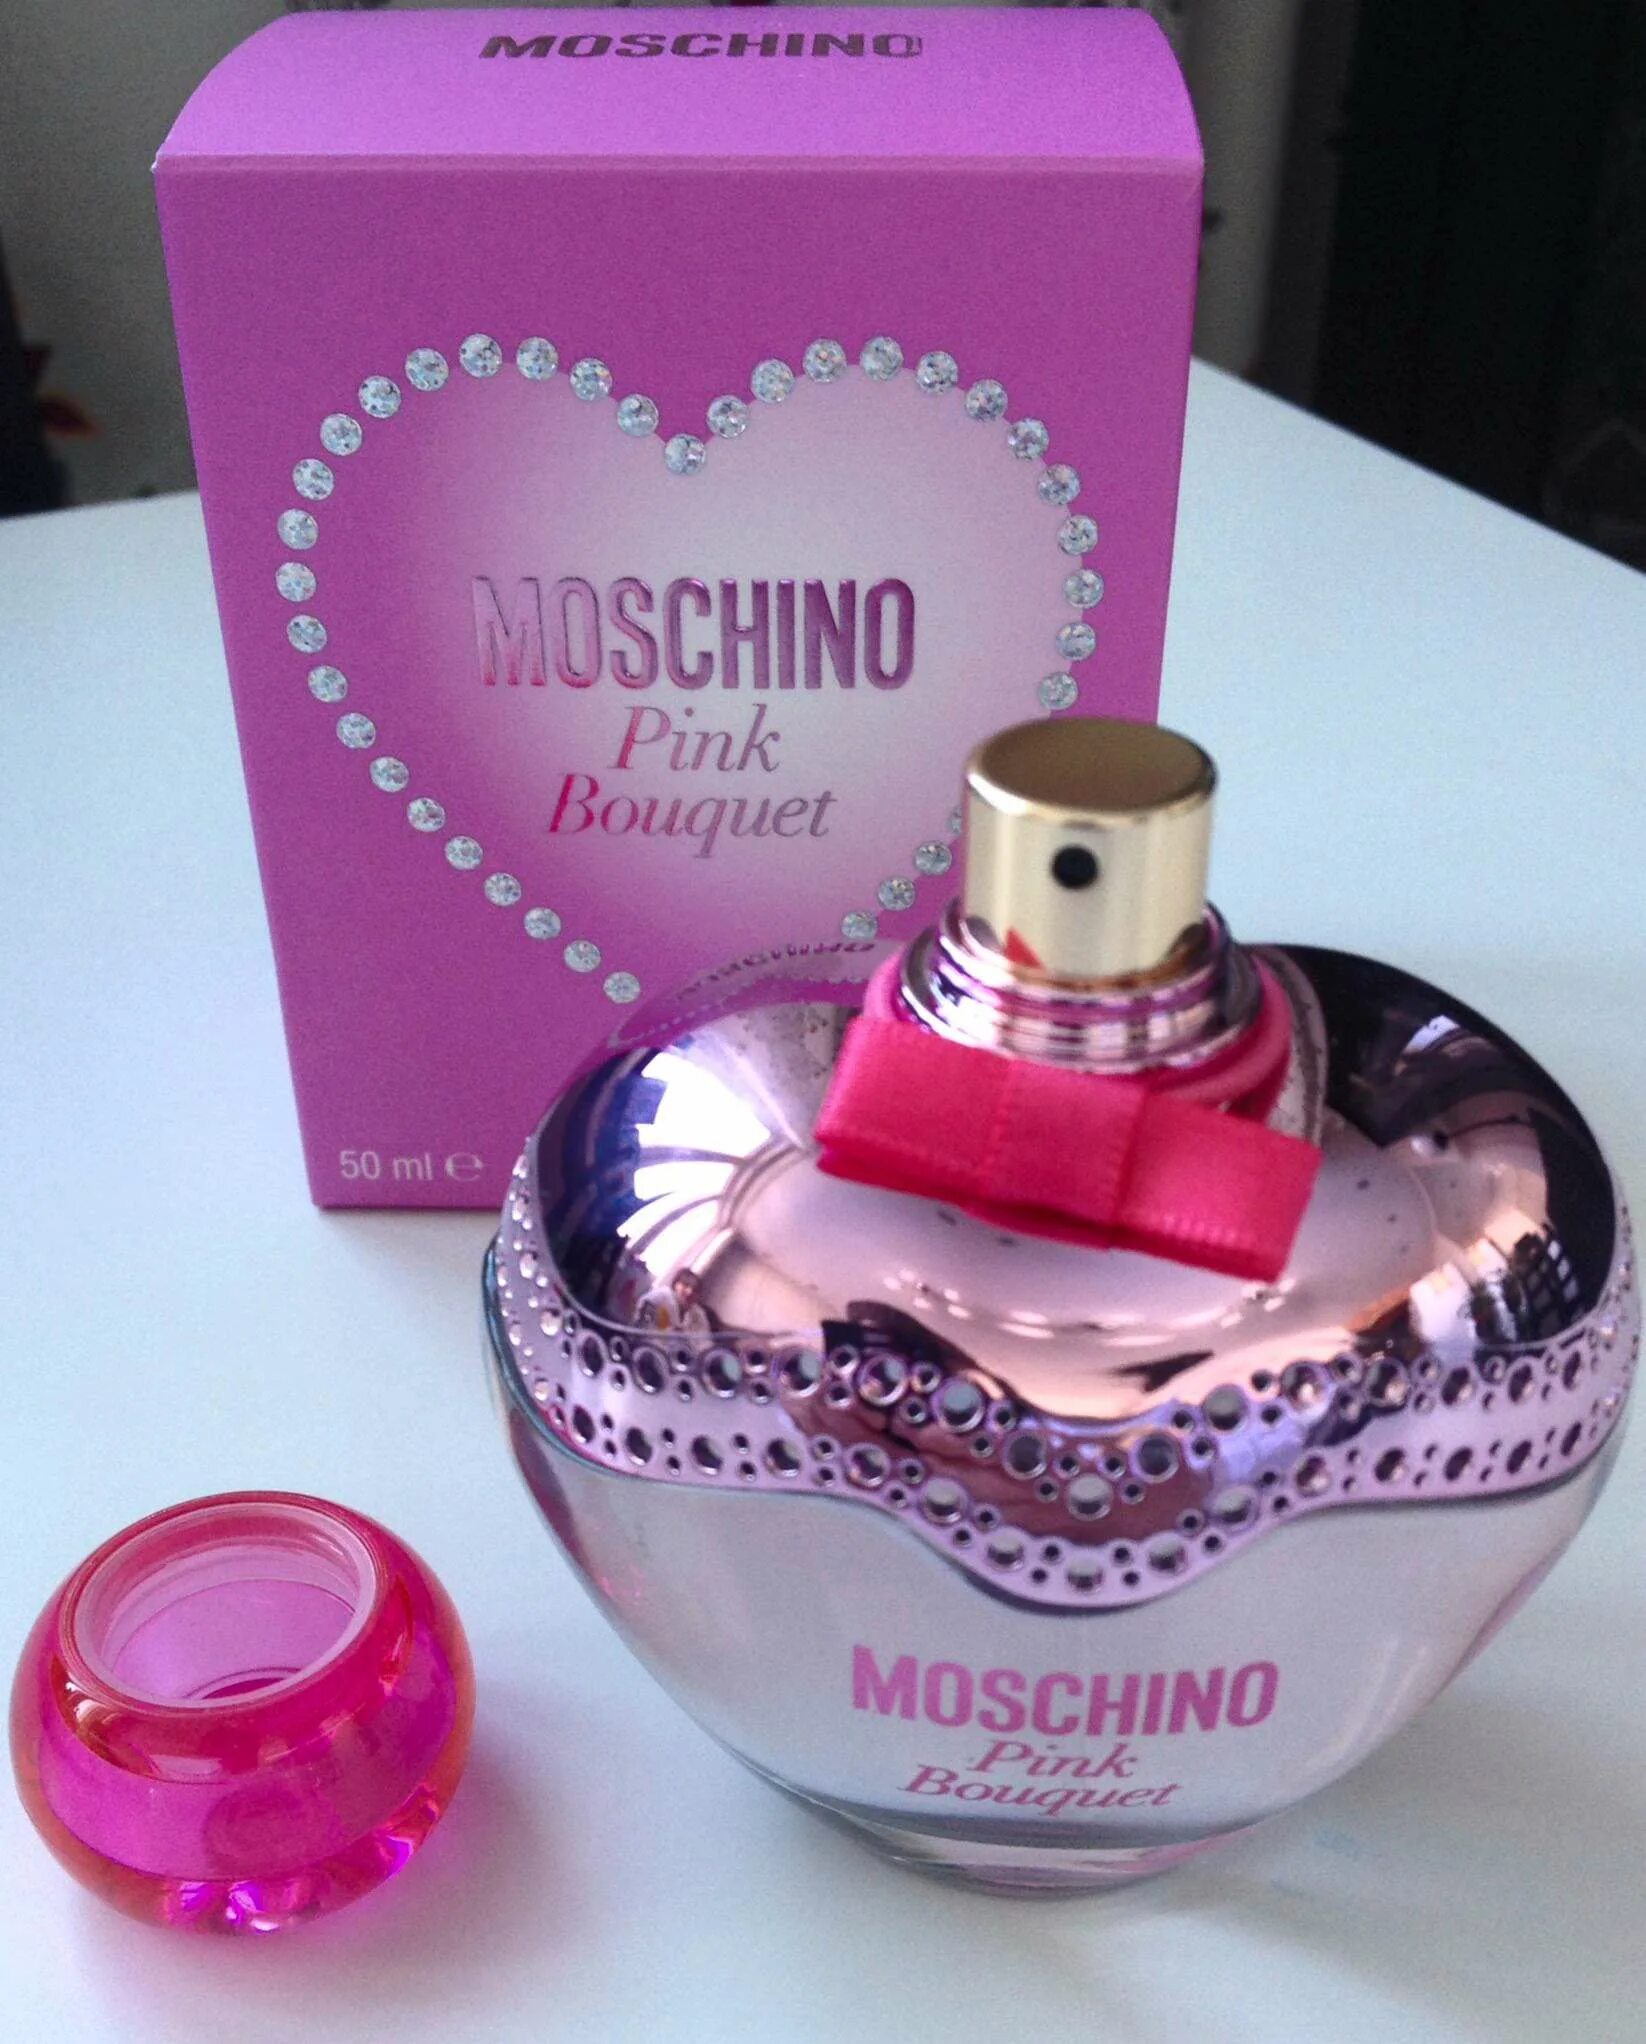 Moschino Pink Bouquet 50ml. Духи Moschino Pink Bouquet. Жен туалетная вода Moschino Pink Bouquet. Туалетная вода Moschino Pink Bouquet Letual.